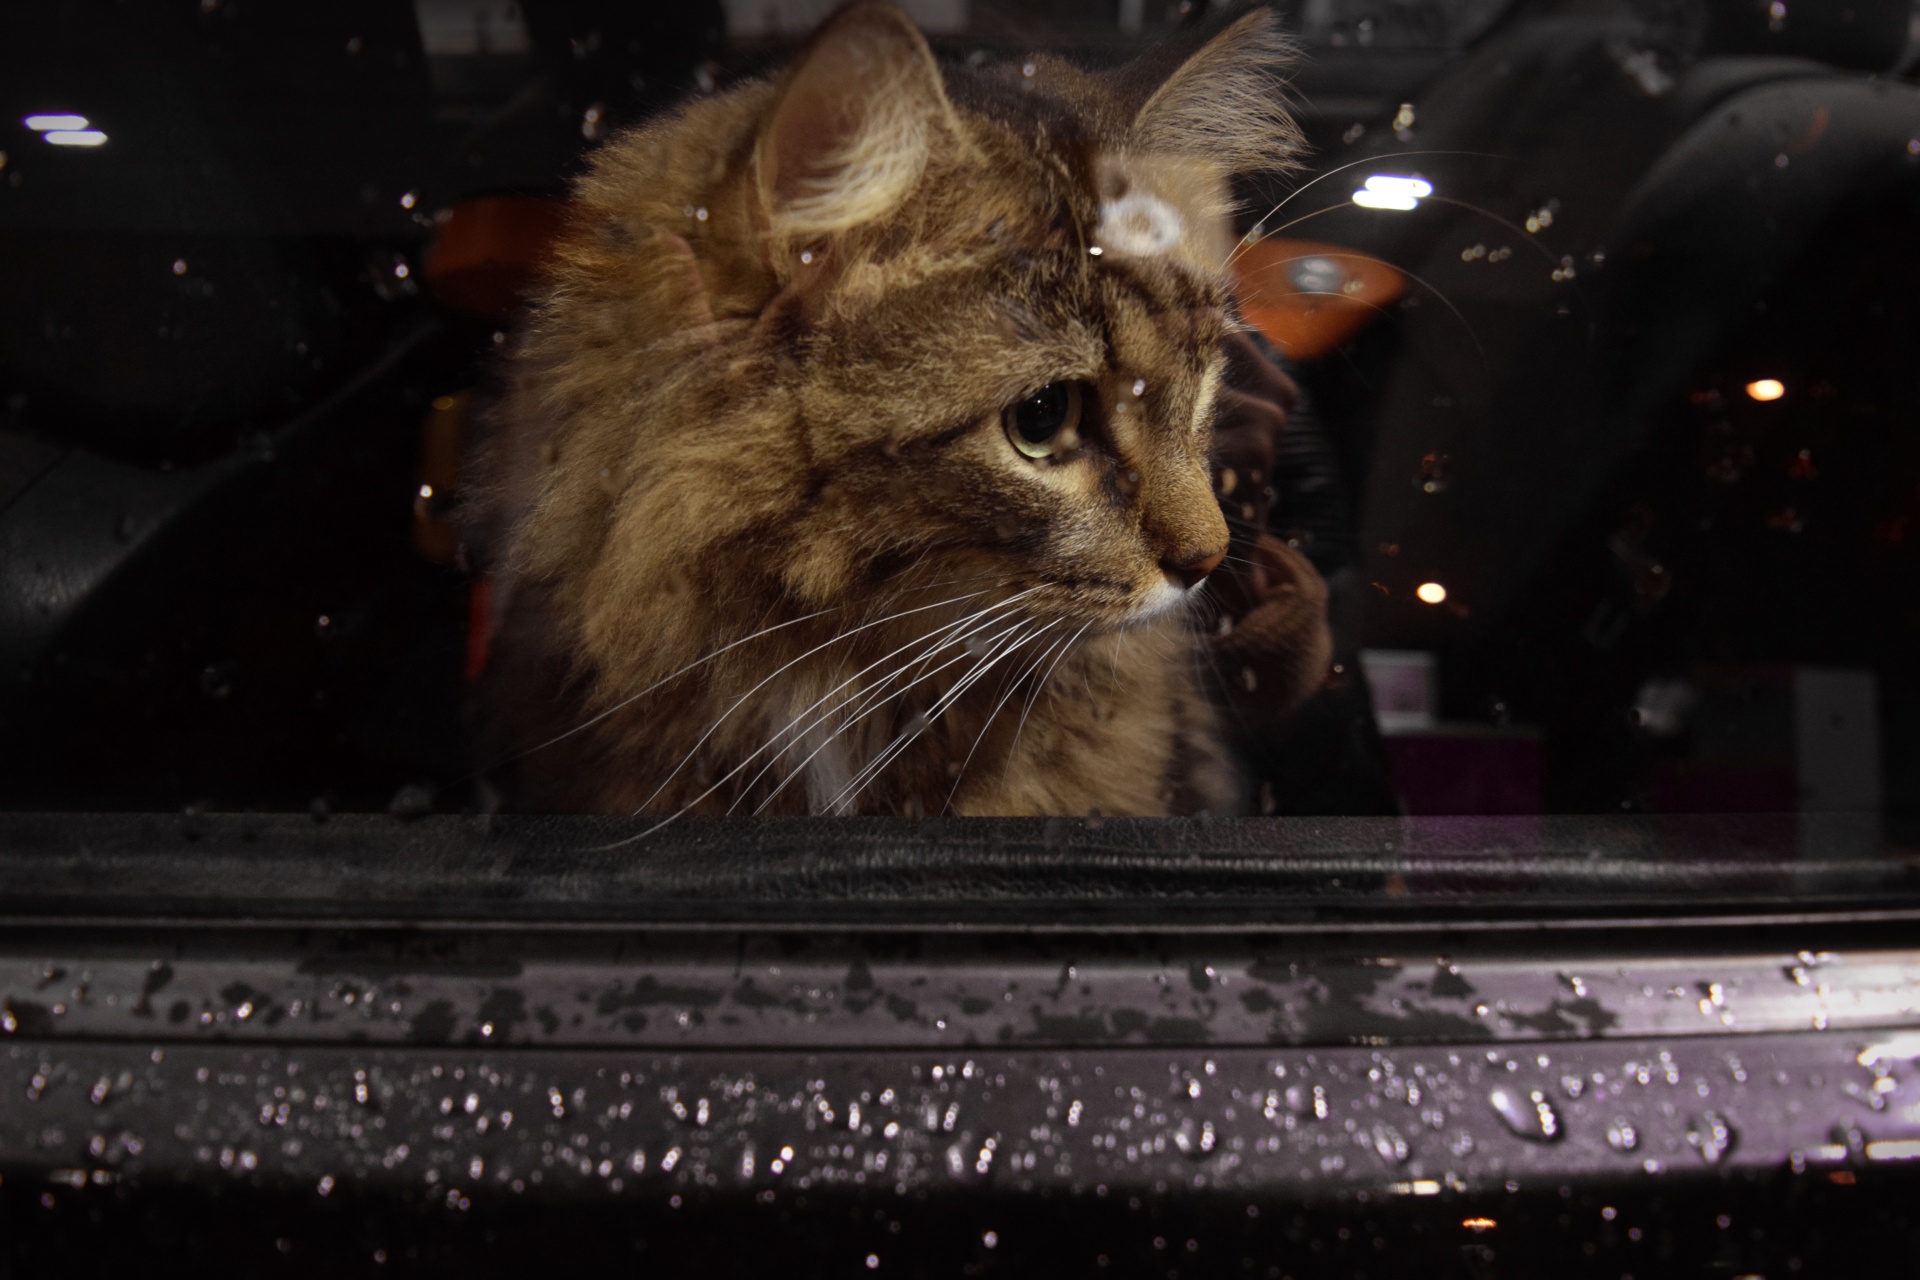 Sad Cat in the Car, looking through a window in a rain